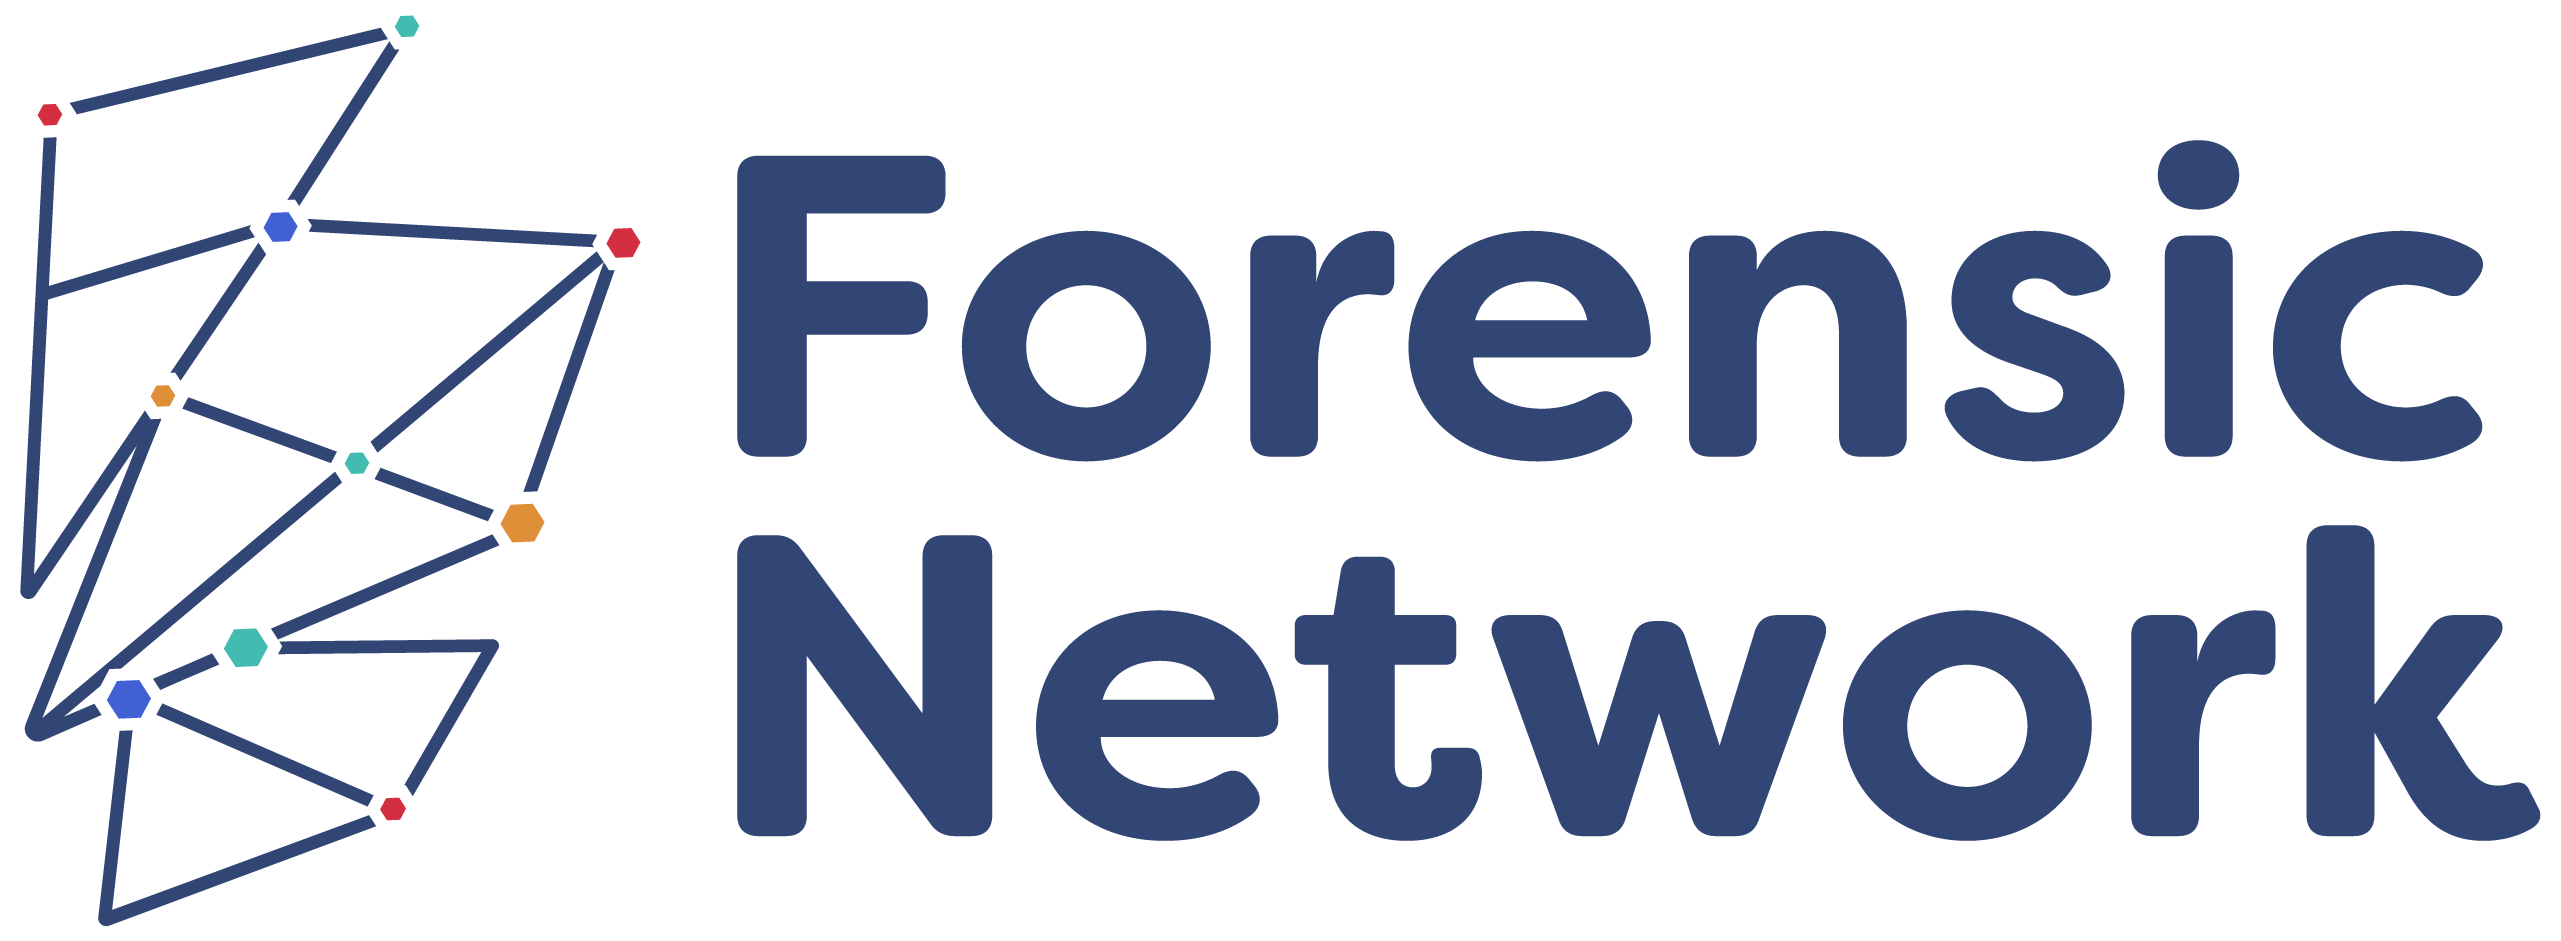 Forensic Network